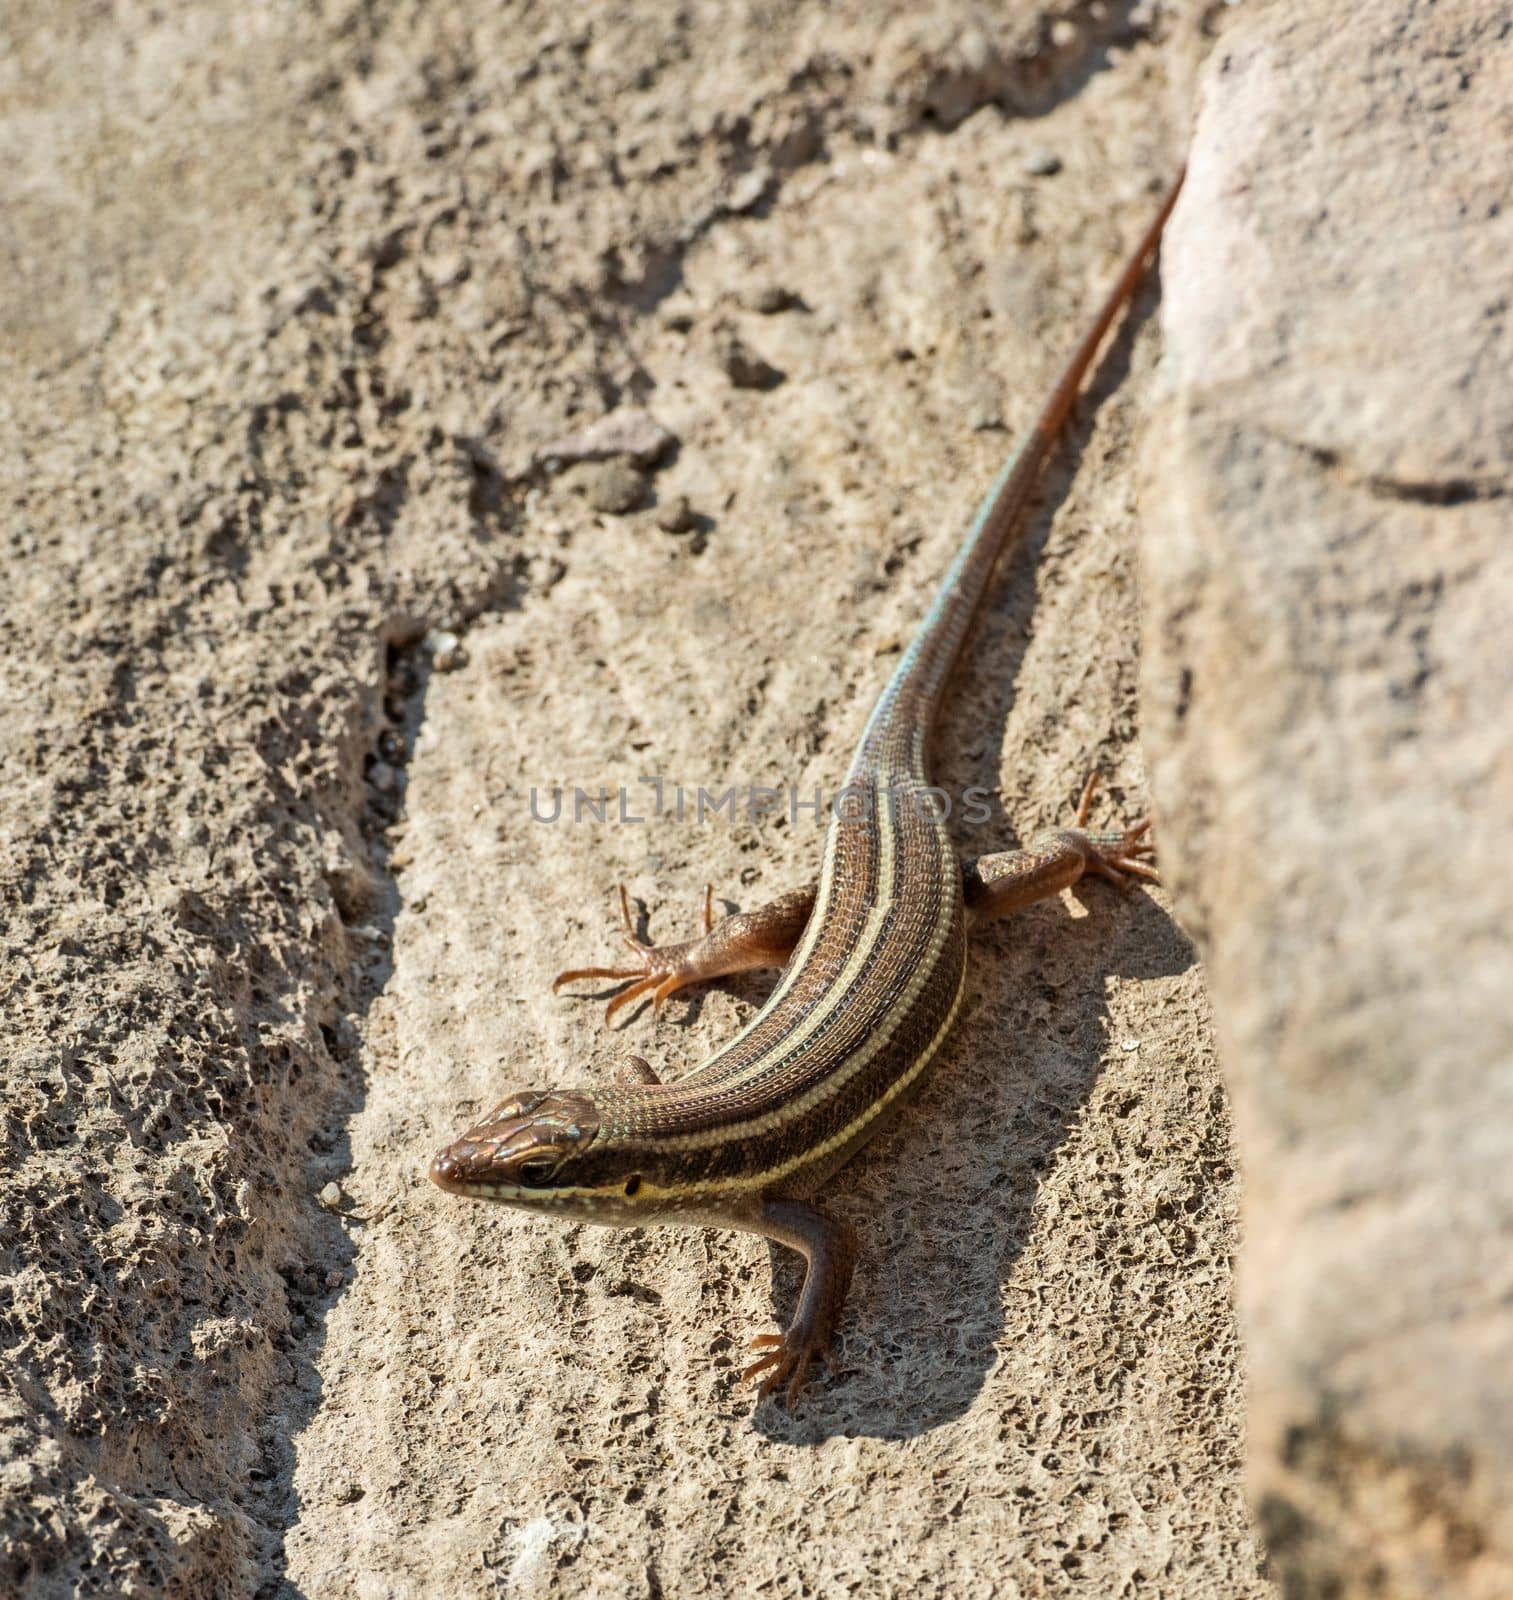 Blue-tailed skink lizard stood on a stone rock in rural countryside garden sunbathing